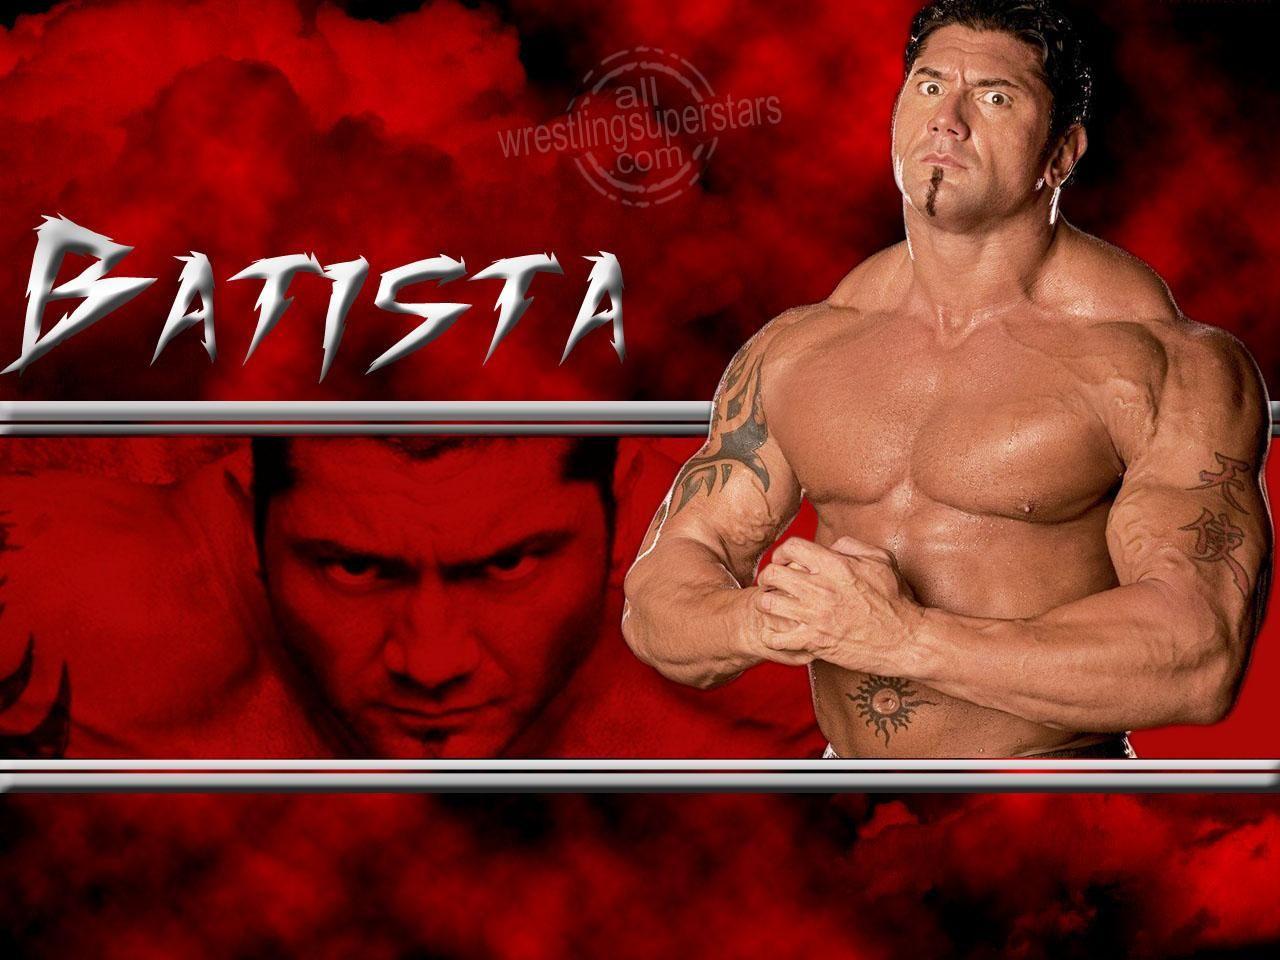 WWE WWE Wrestling Star Batista